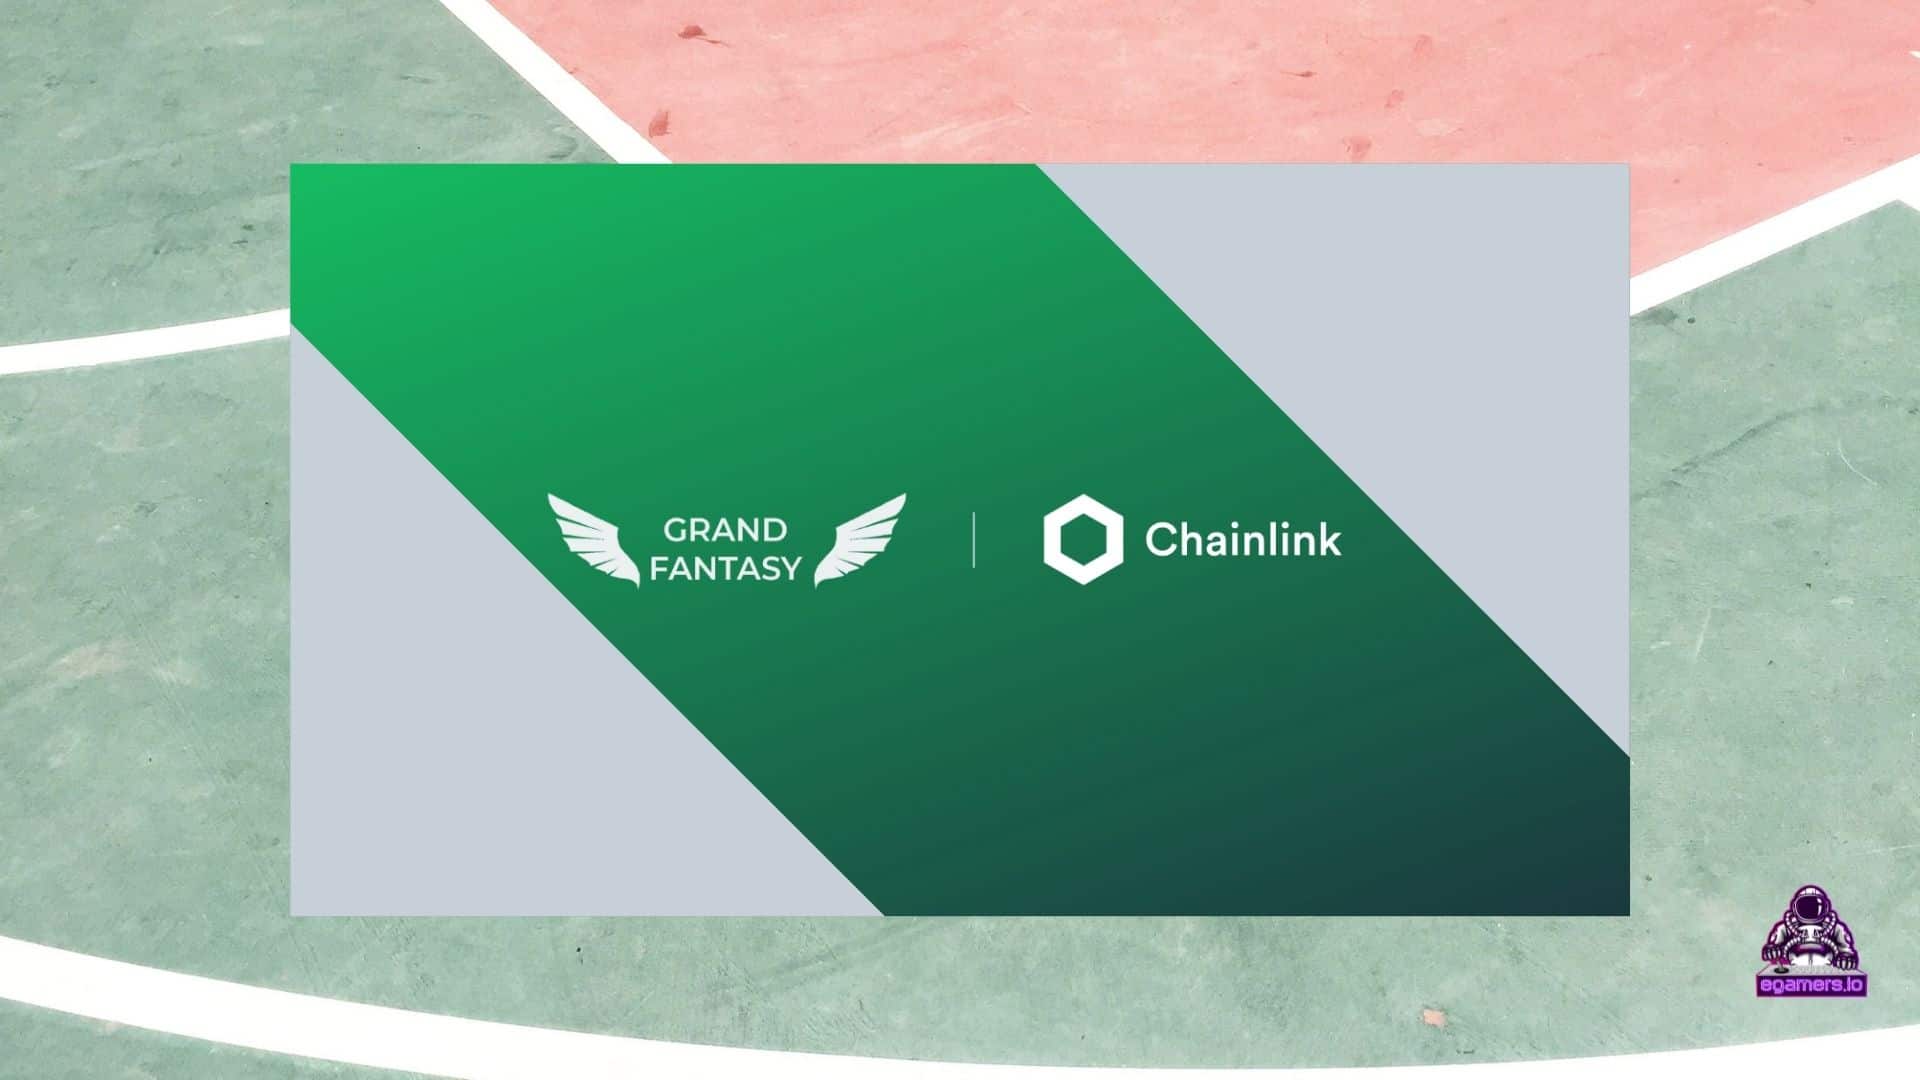 Grand Fantasy Integrates Chainlink Sports Data